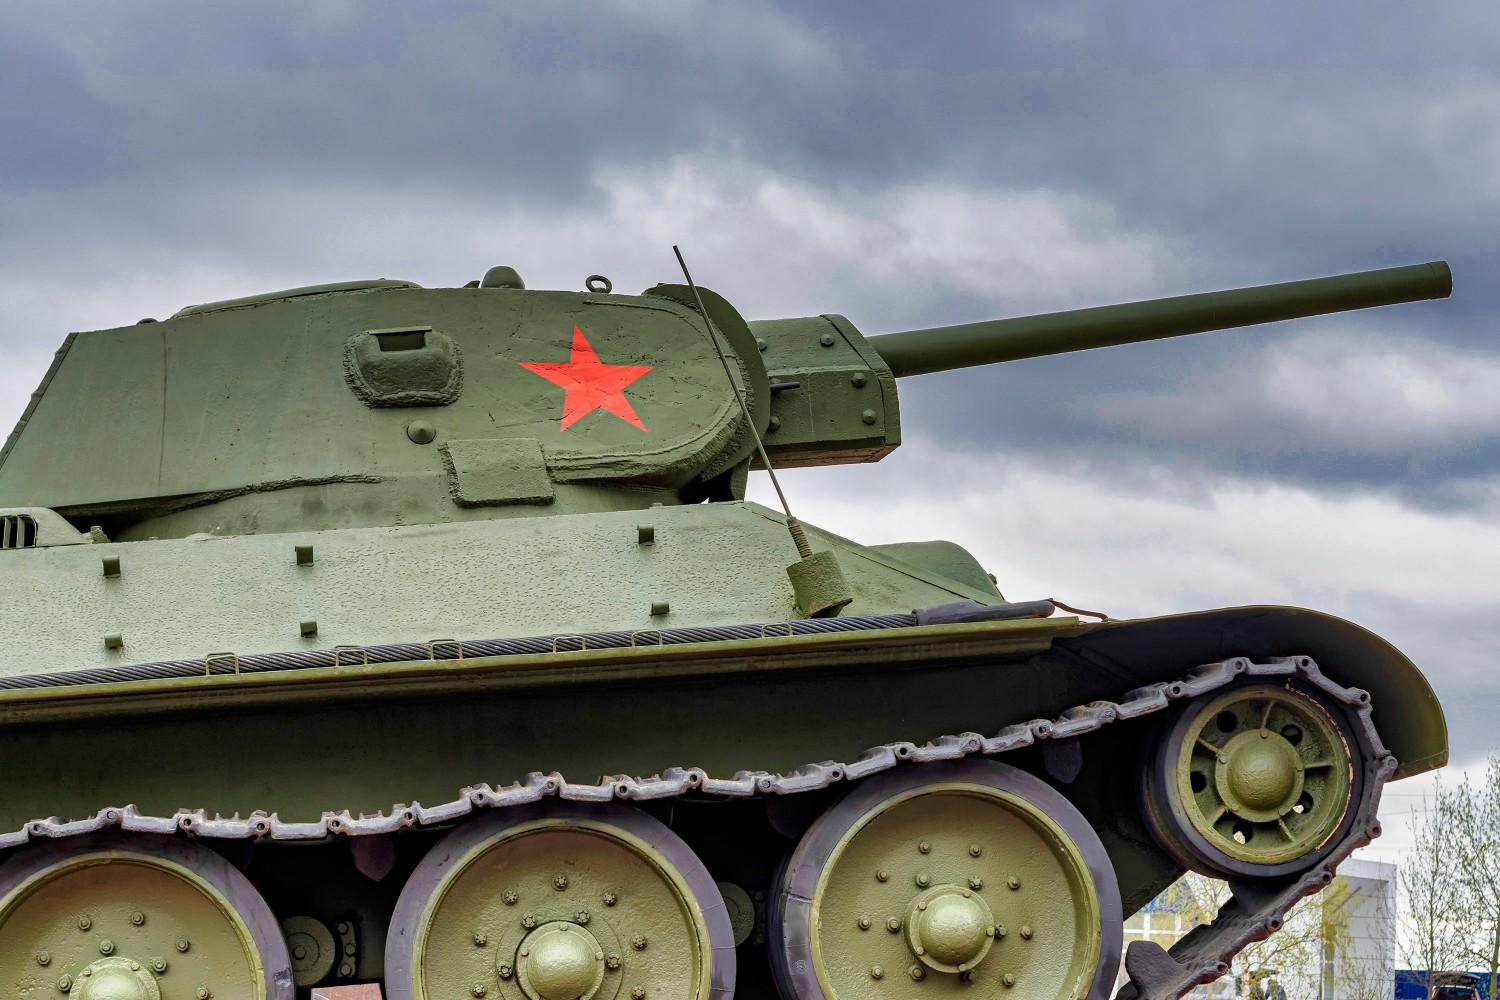 A Soviet tank T-34 from the World War II period.